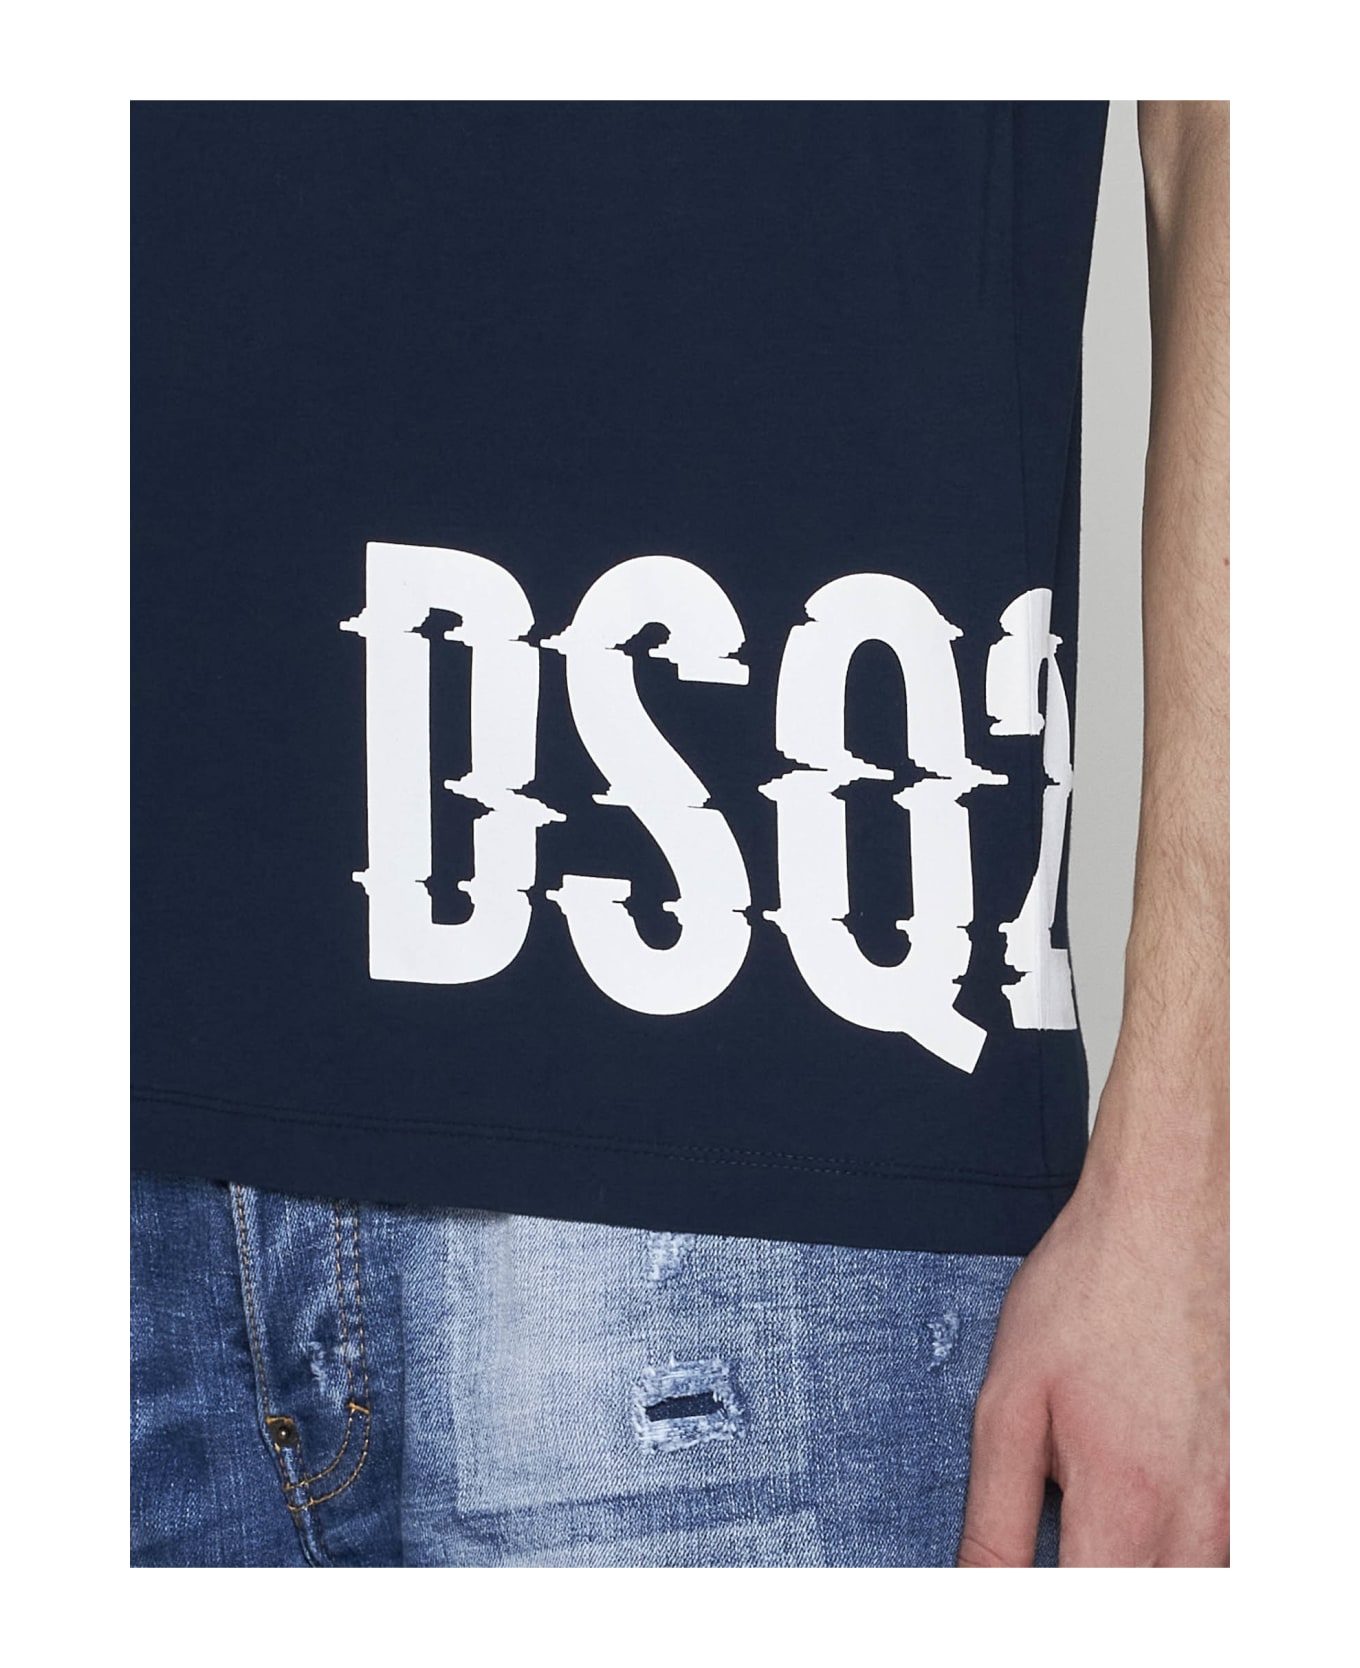 Dsquared2 T-shirt - Blue navy